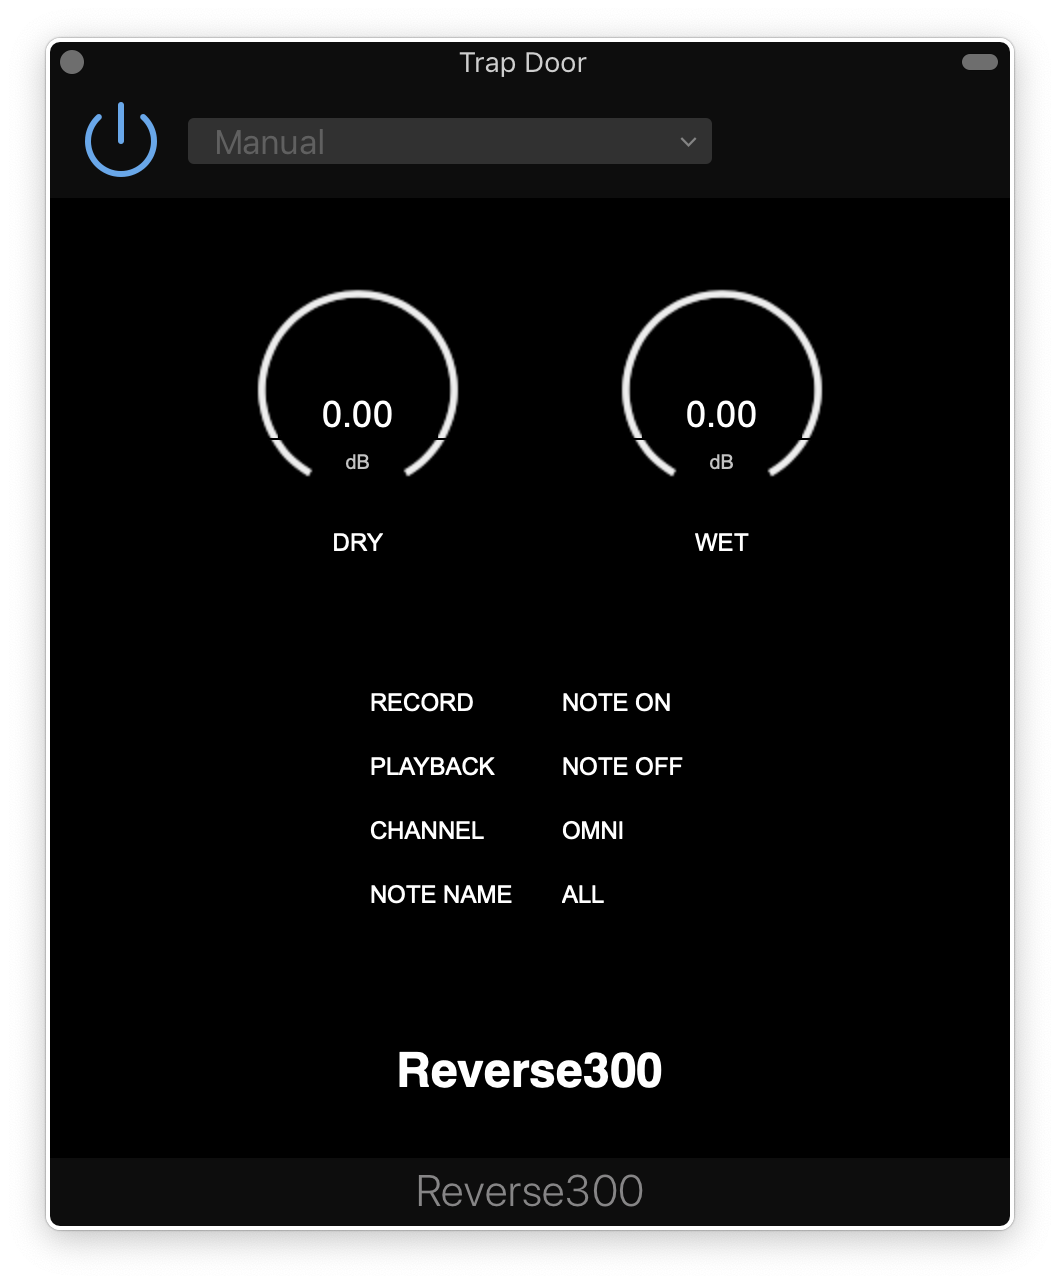 Snapshot of the Reverse300